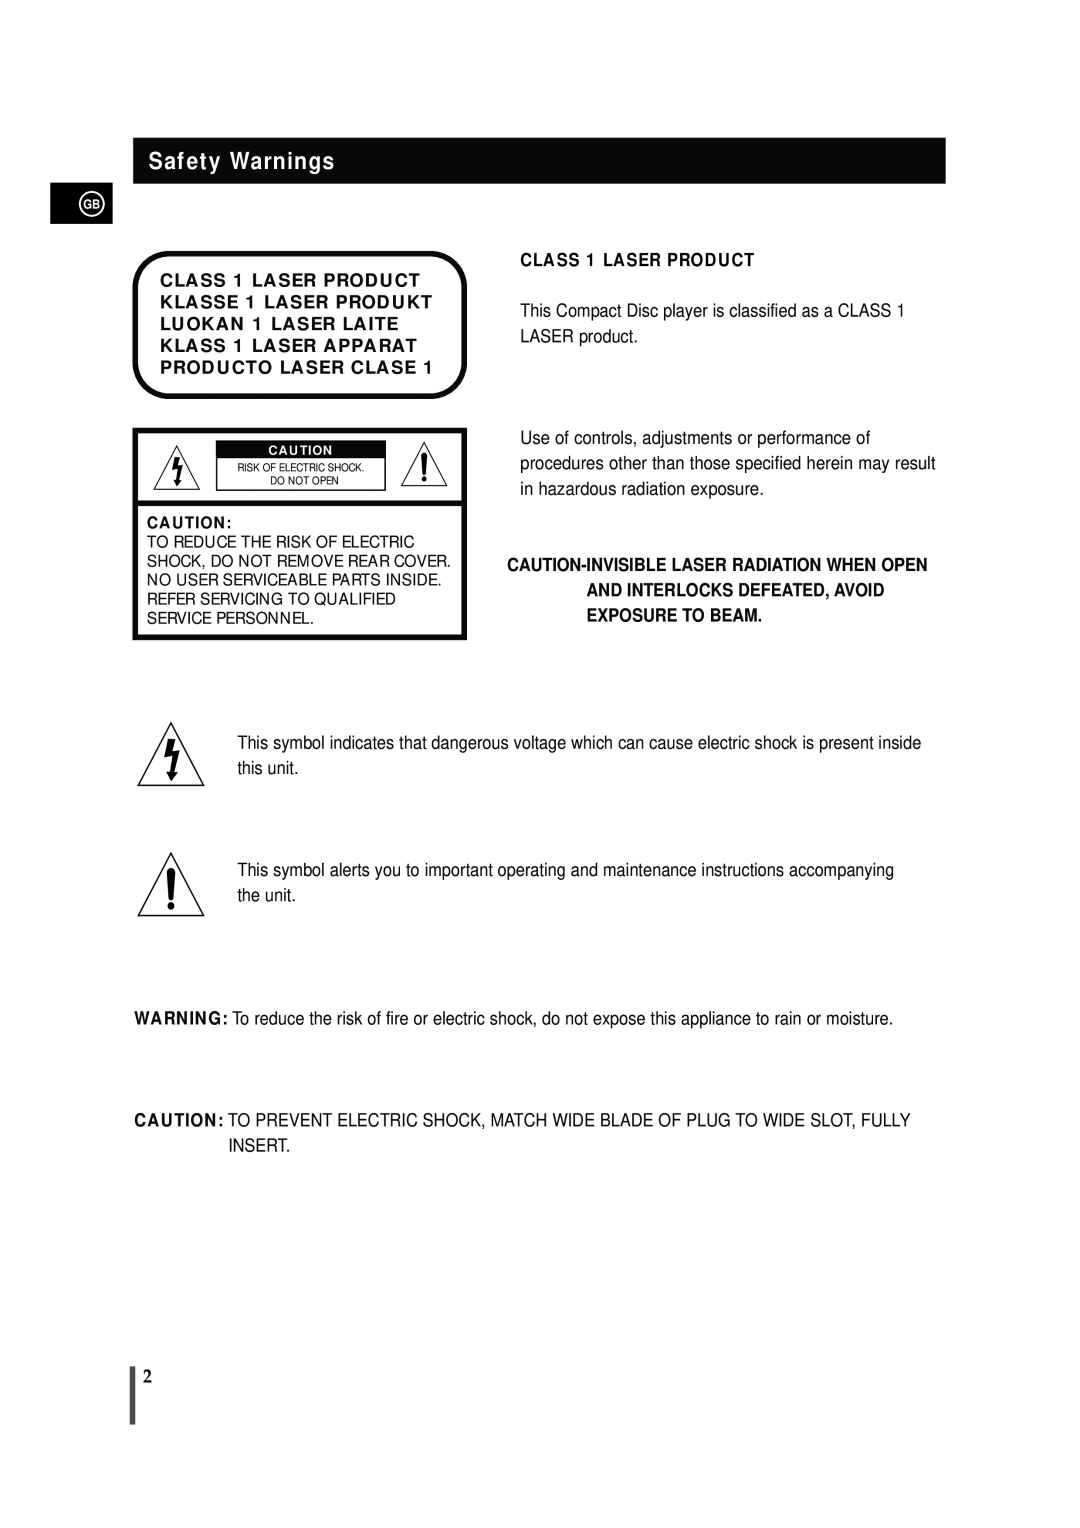 Samsung MAX-VB450 instruction manual Safety Warnings, CLASS 1 LASER PRODUCT KLASSE 1 LASER PRODUKT, Producto Laser Clase 